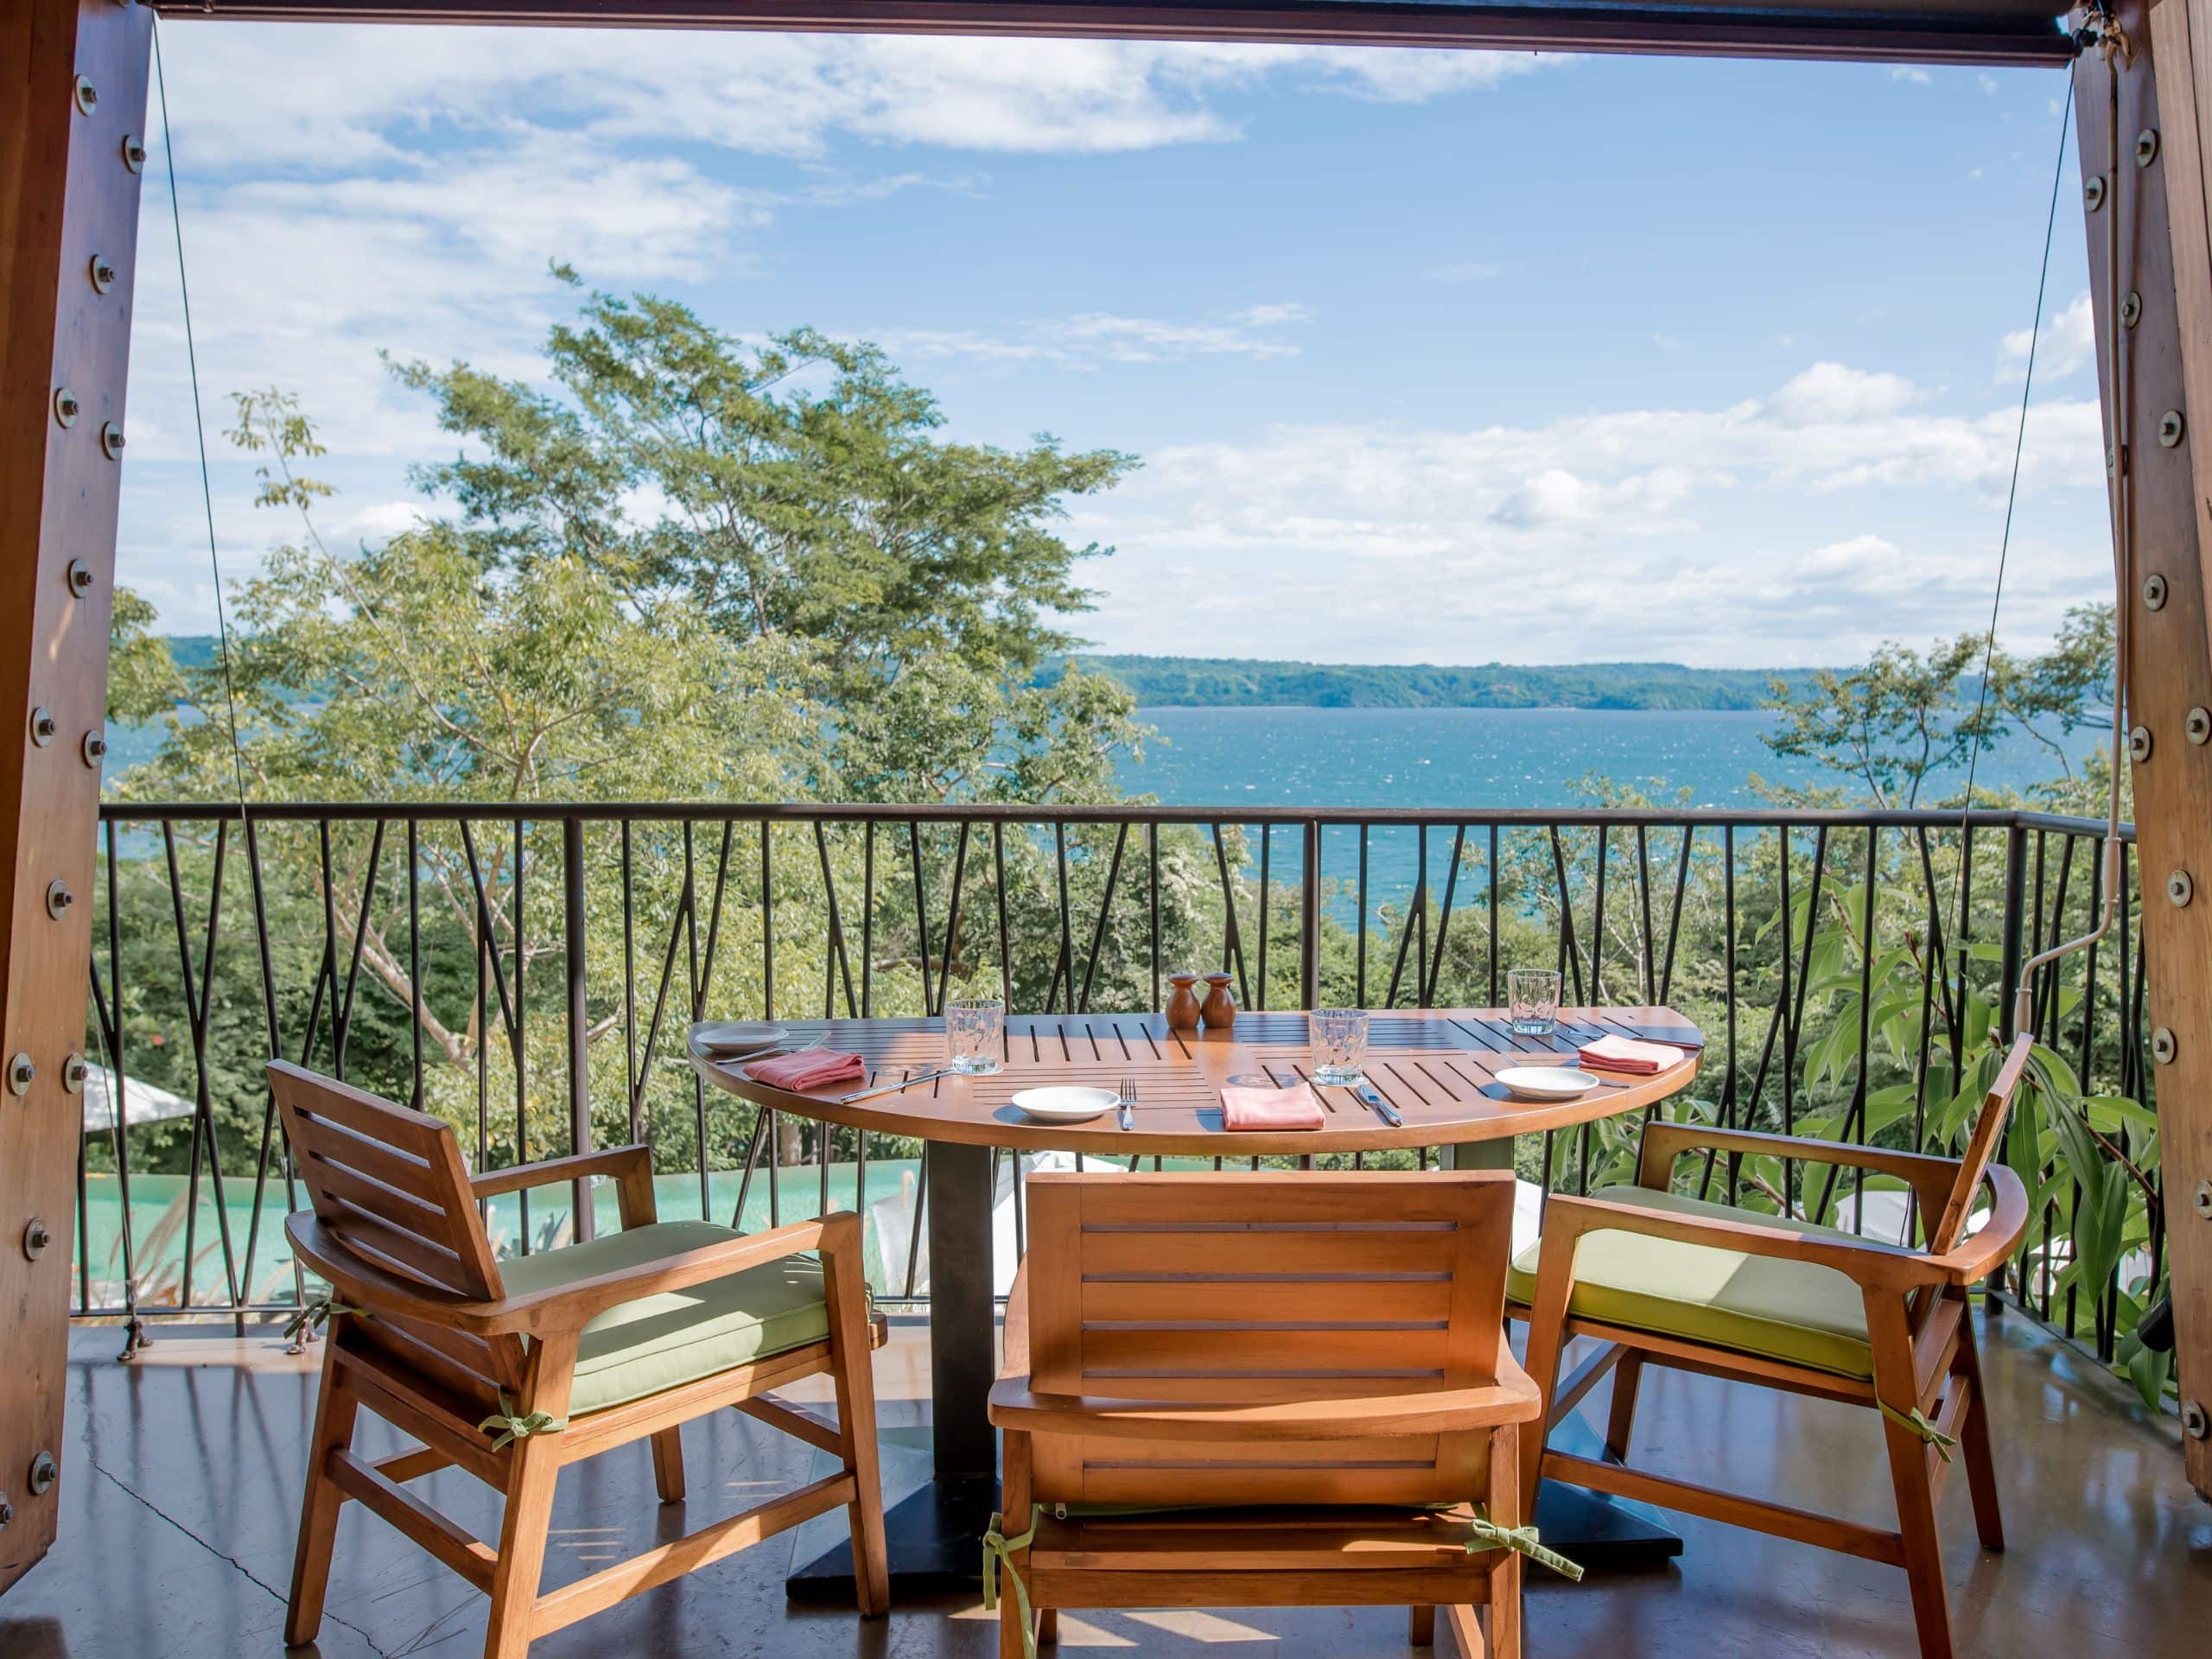 Andaz Costa Rica Resort at Peninsula Papagayo Breakfast Seating